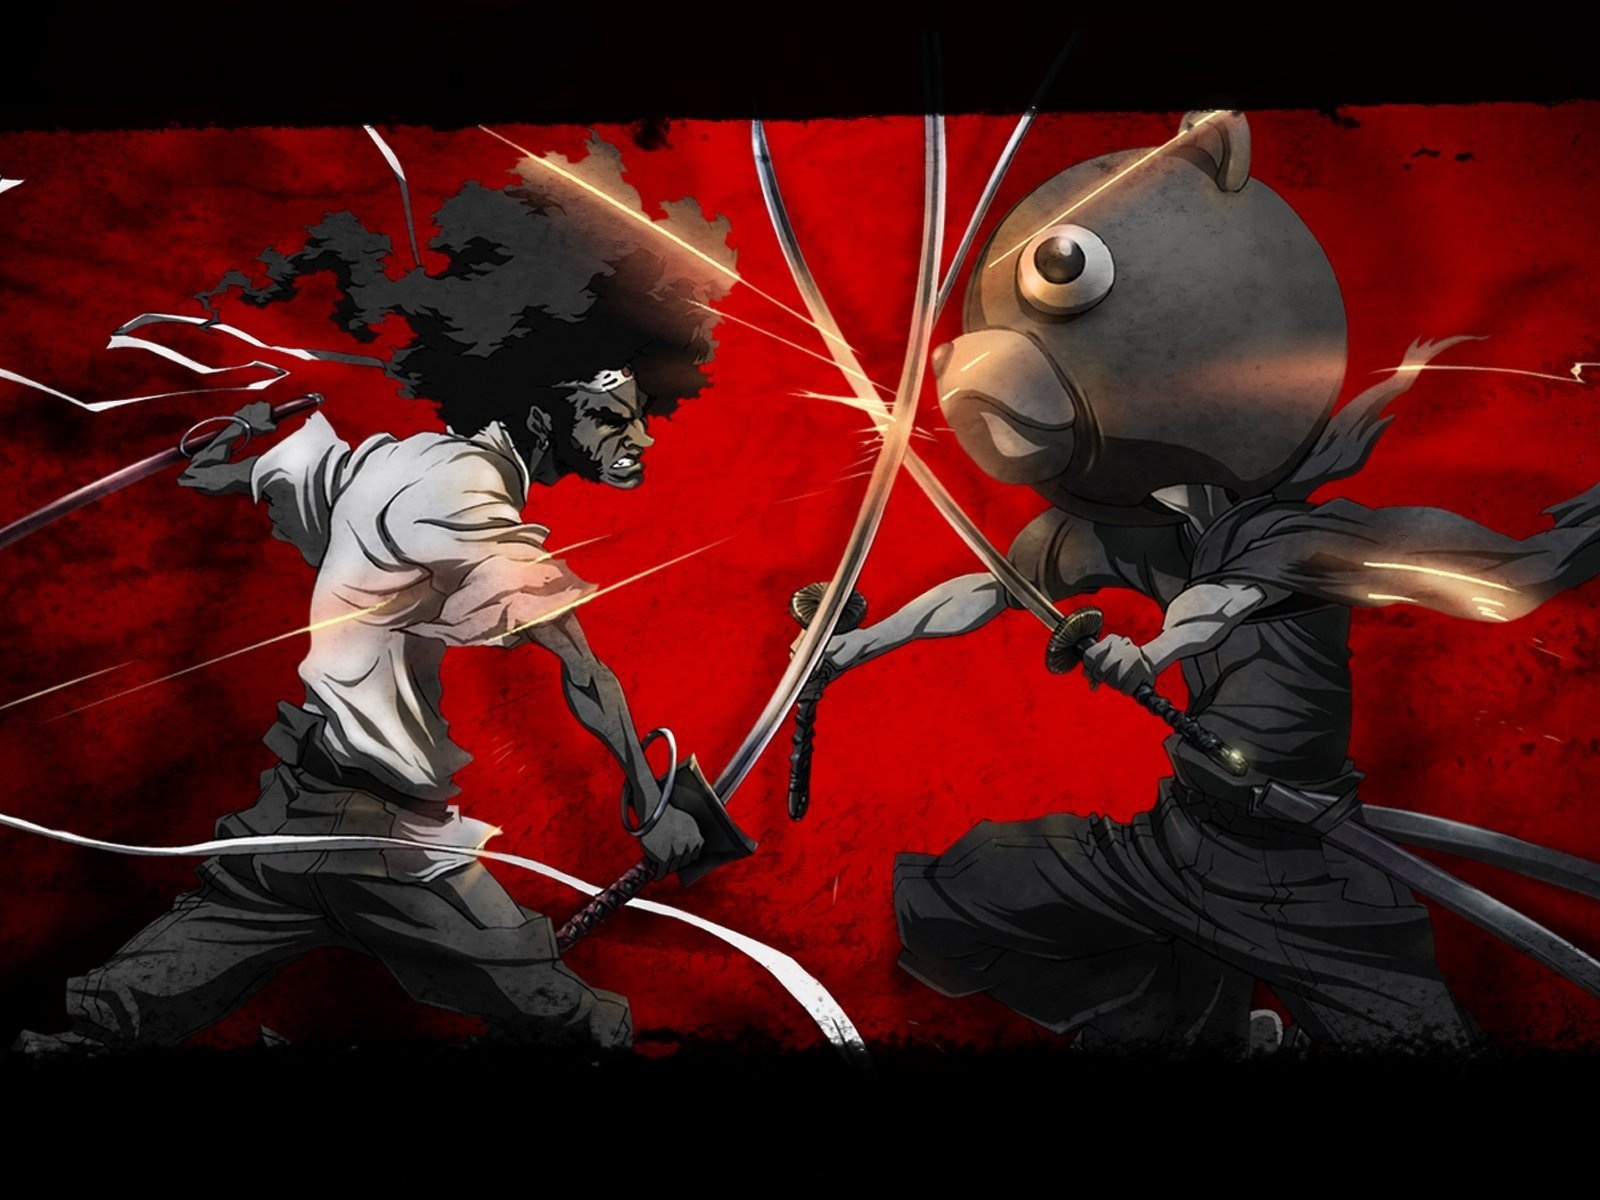 Afro Samurai vs Kuma for 1600 x 1200 resolution